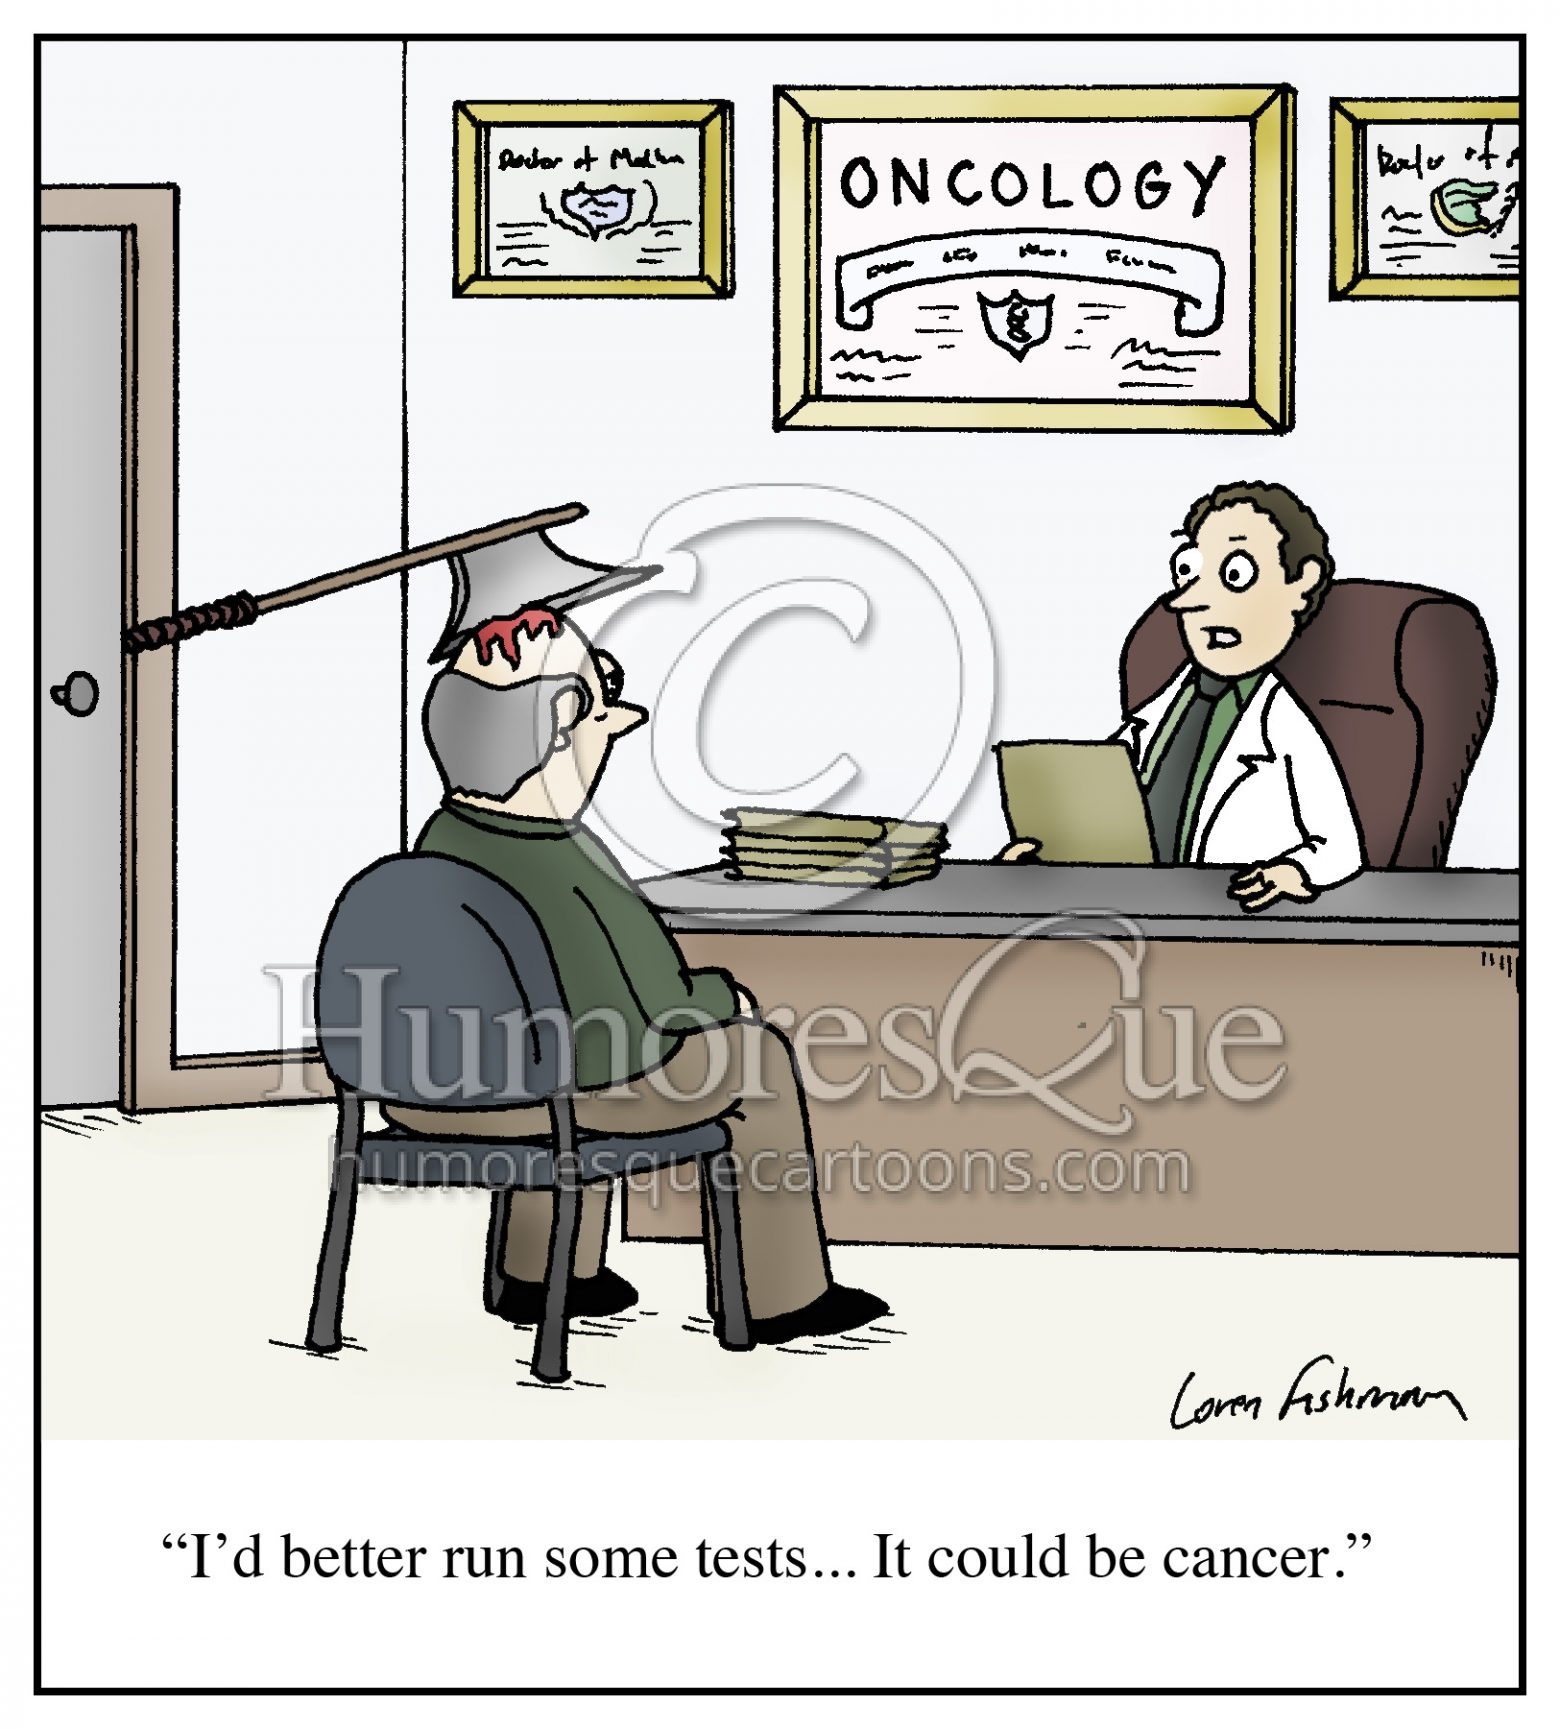 OncologyAx_CLR-1560x1729.jpg